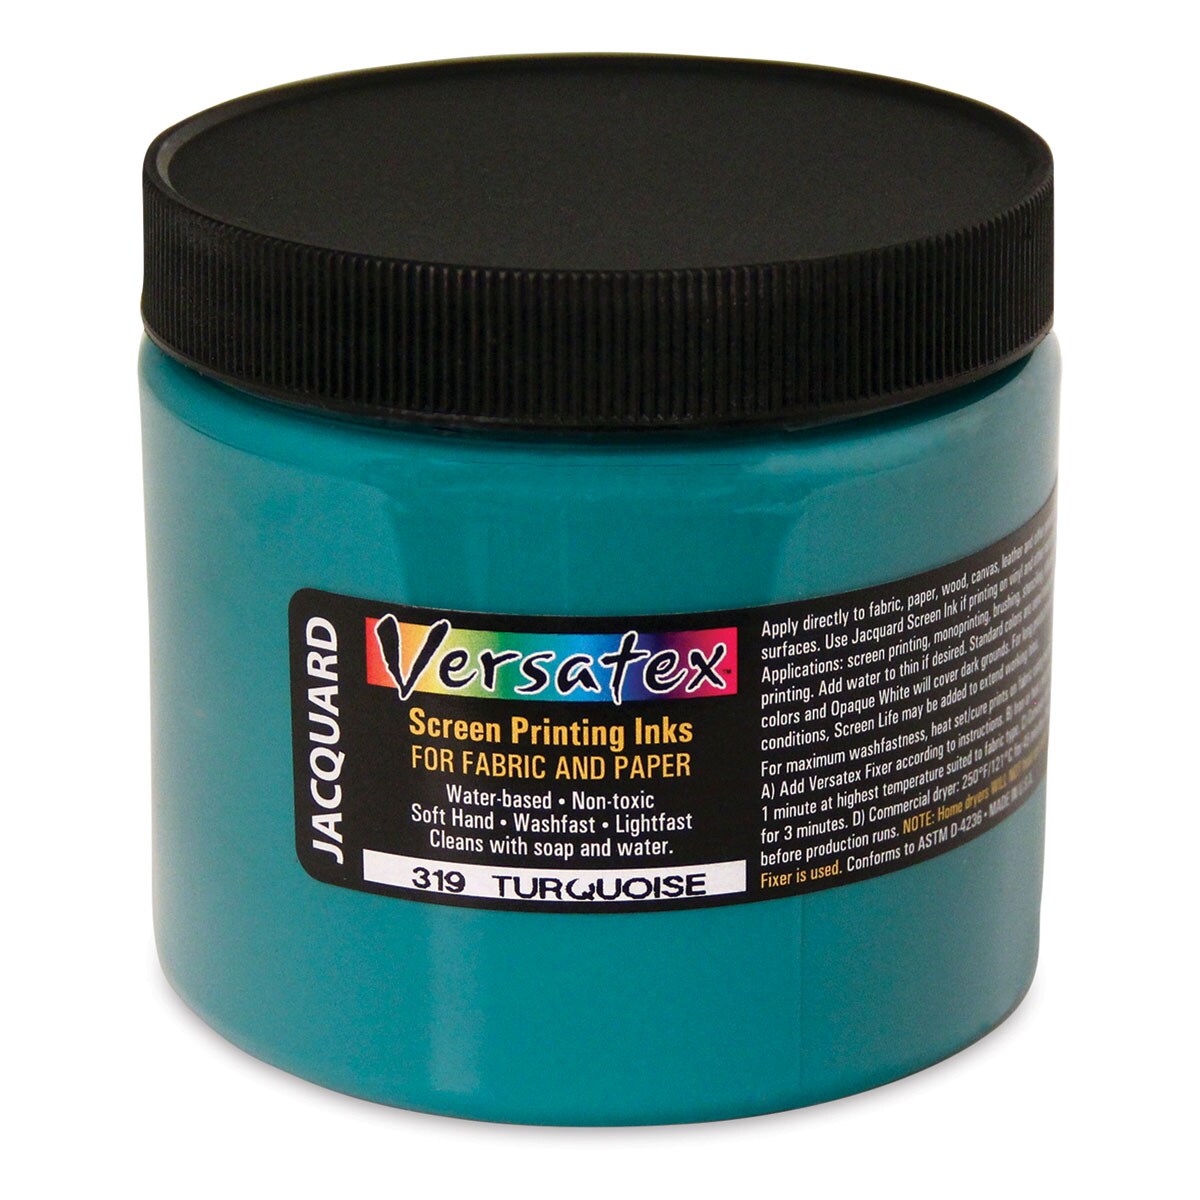 Jacquard Versatex Screen Printing Ink - Turquoise, 16 oz jar